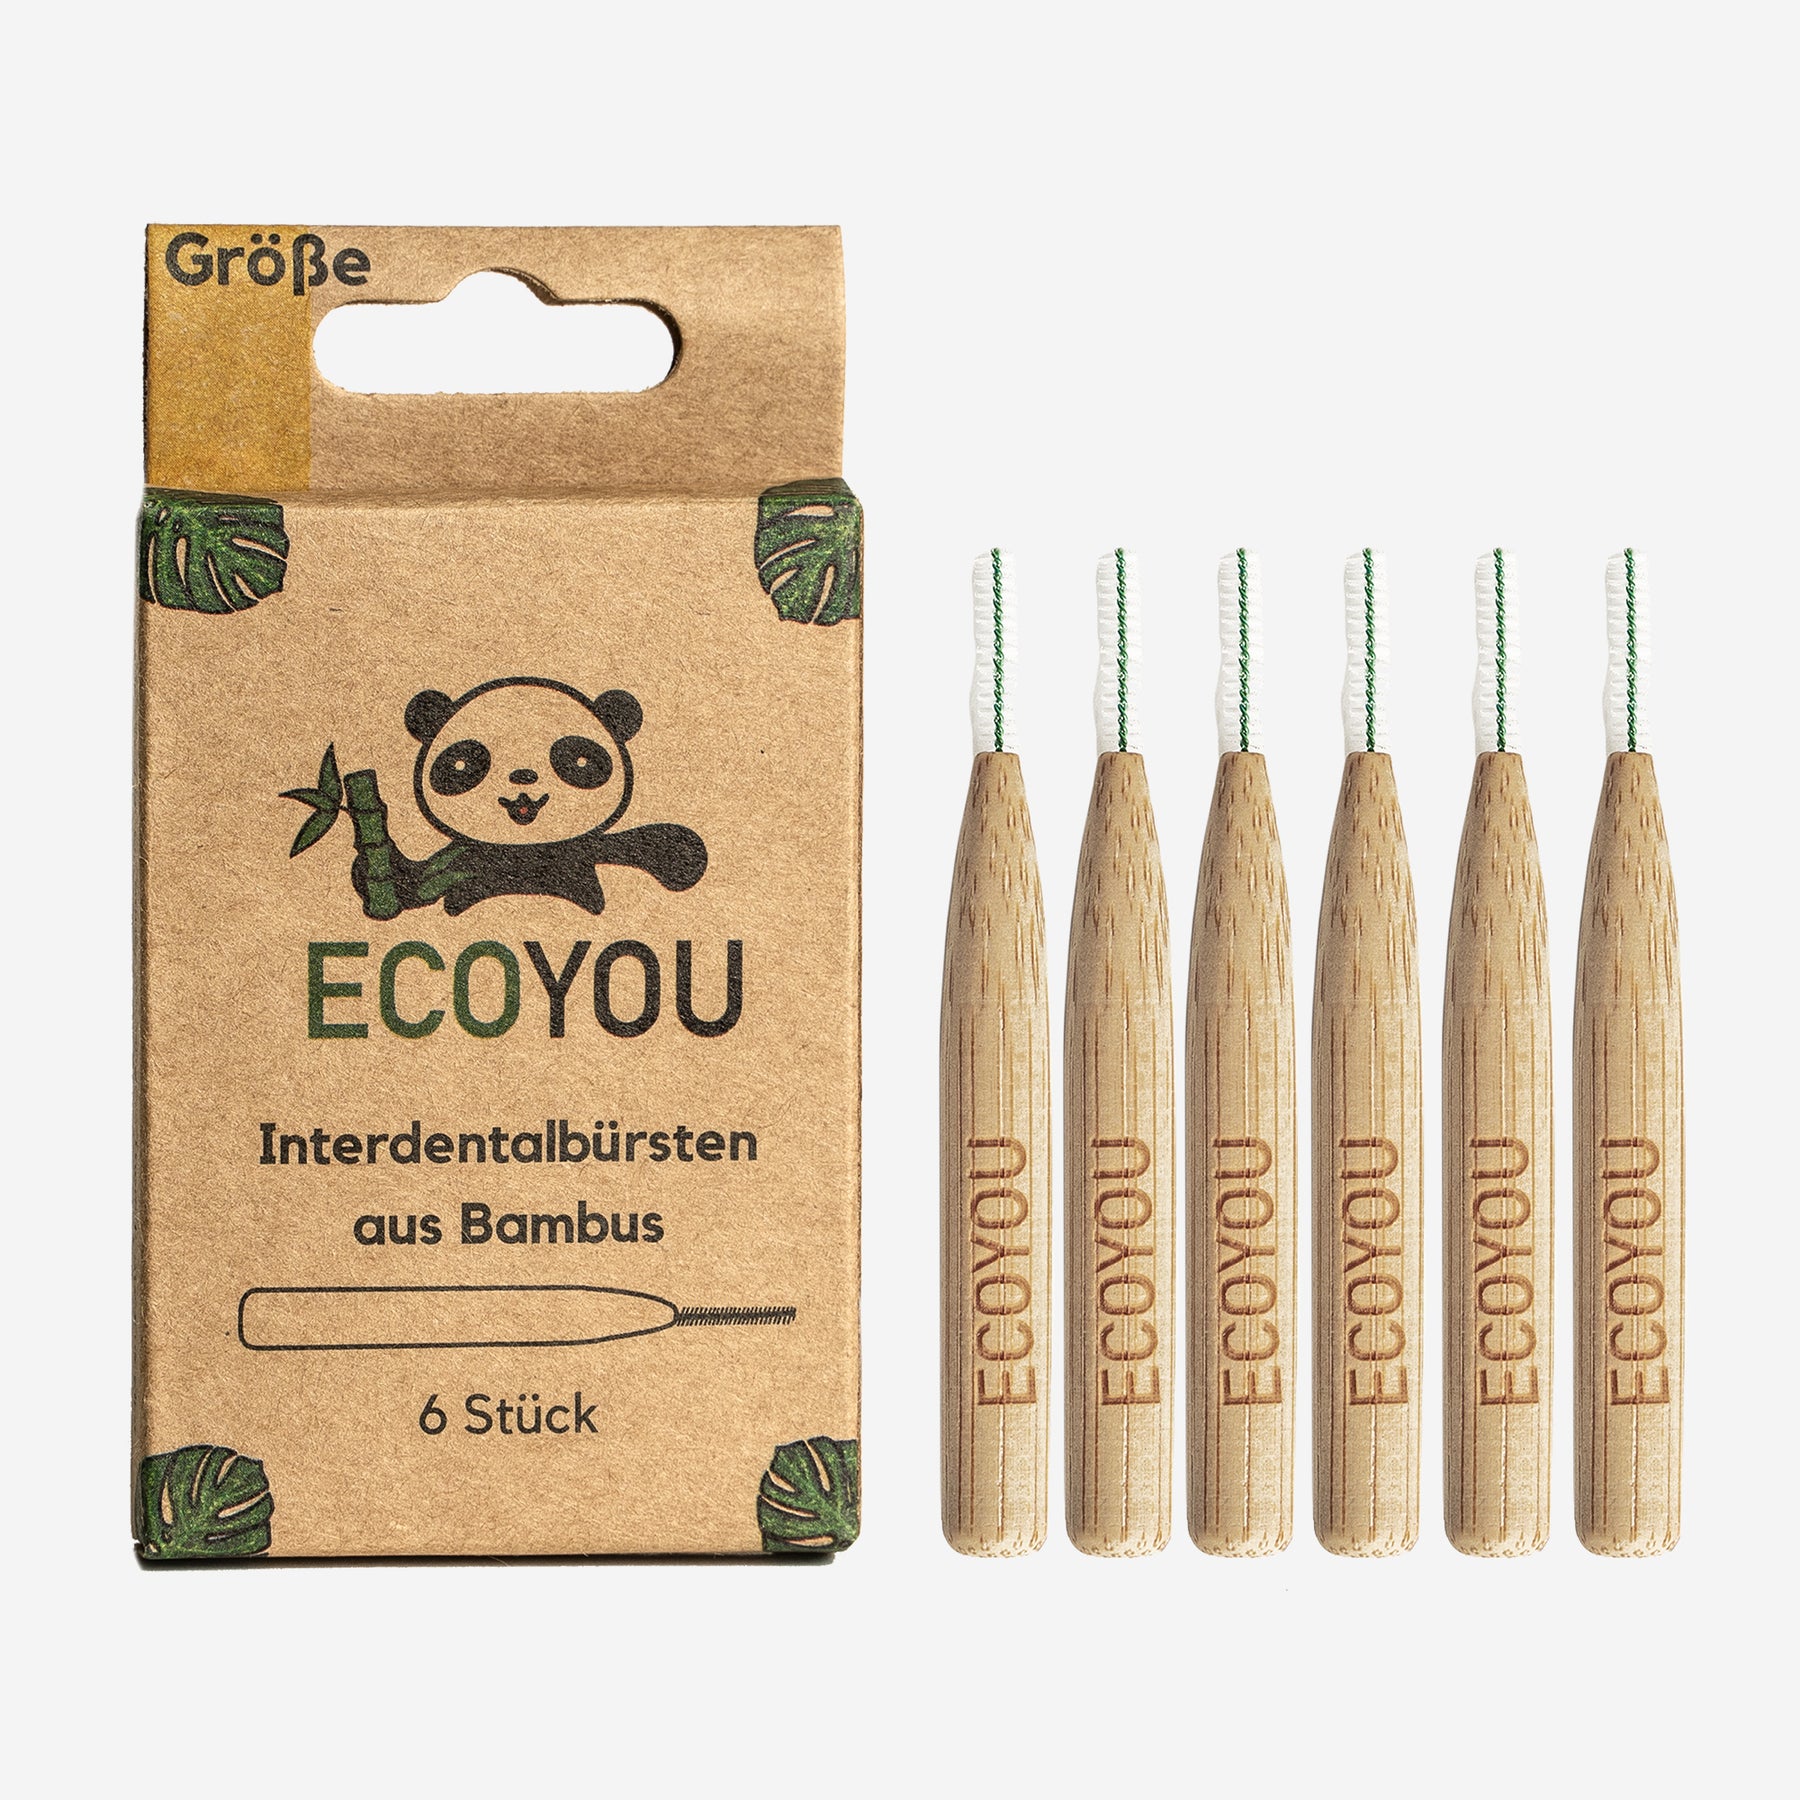 Interdentalbürsten aus Bambus - 6 Stück - EcoYou